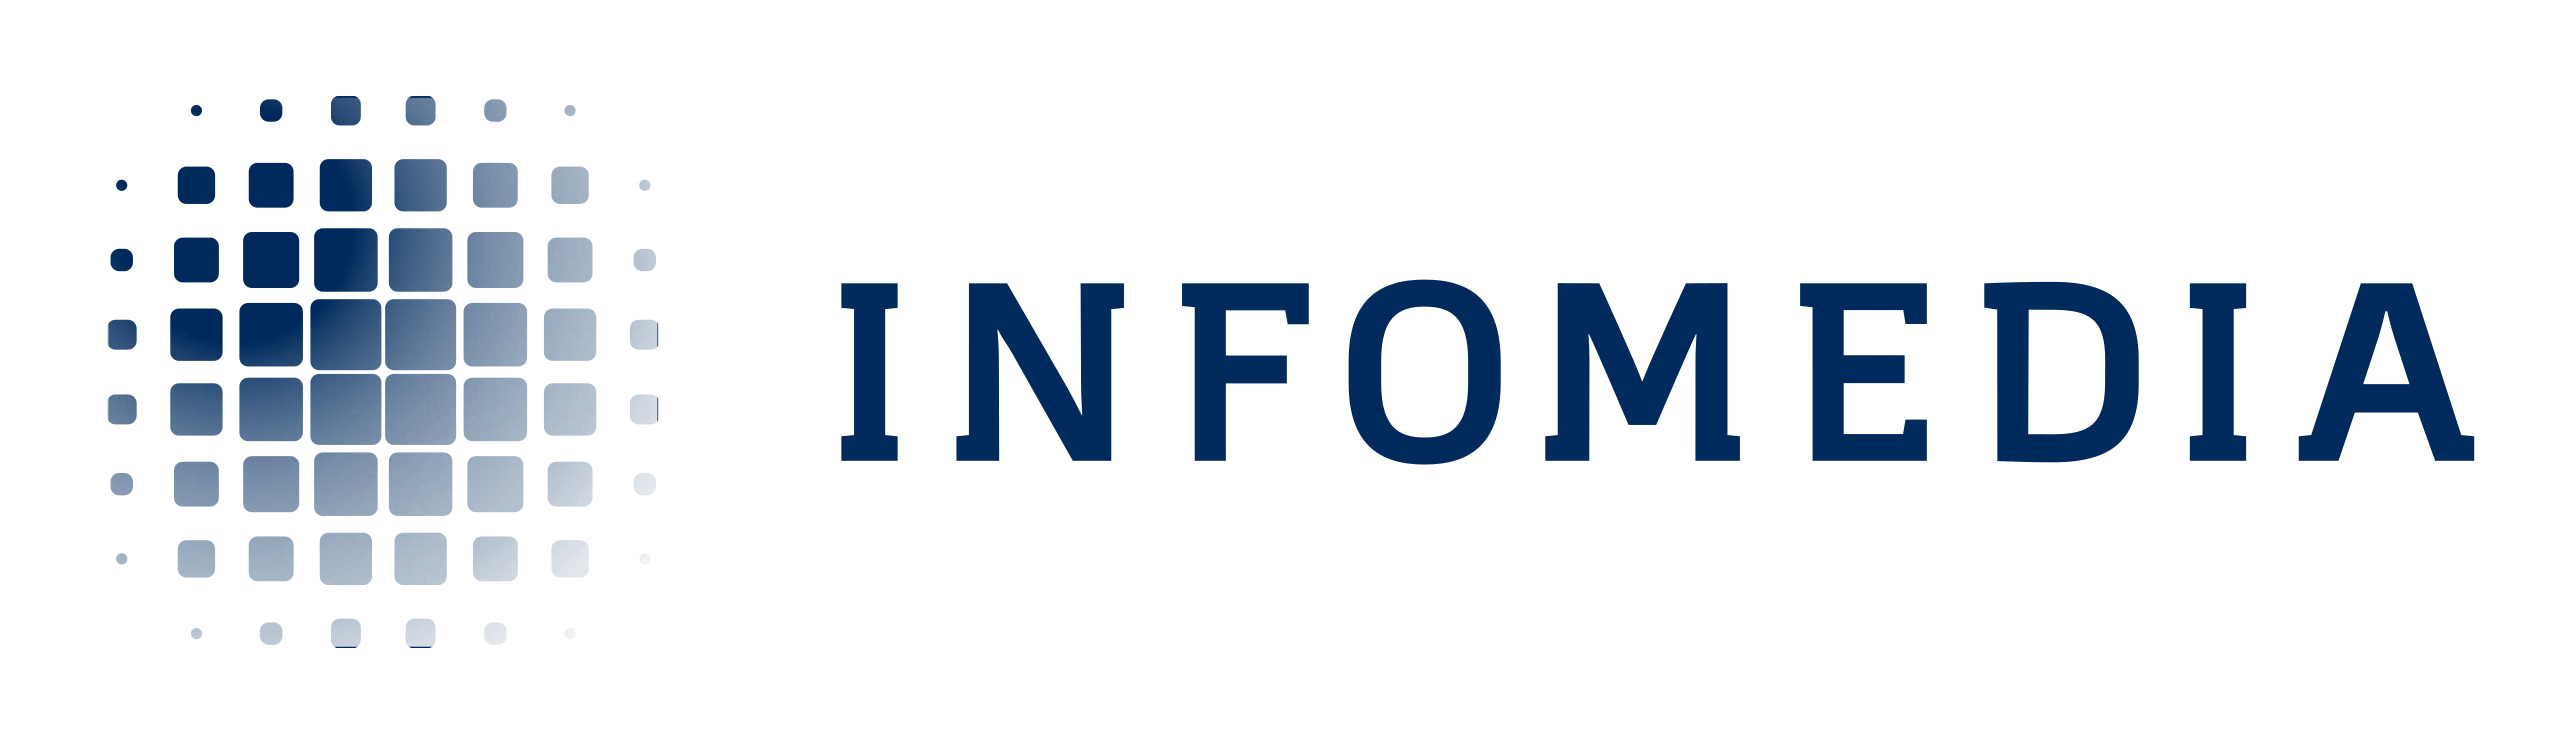 INFOMEDIA_logo.svg